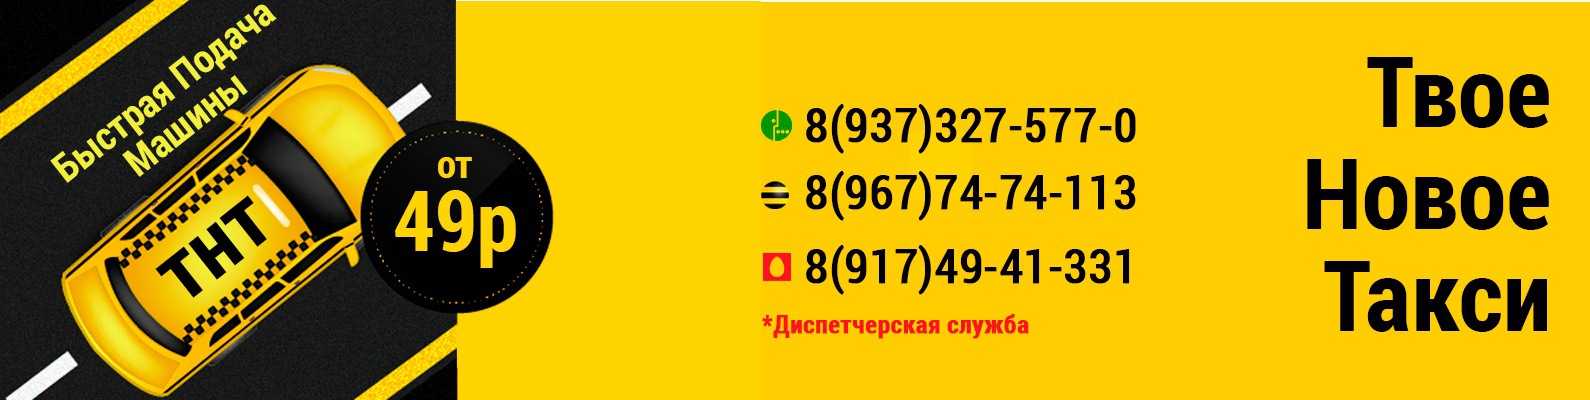 Номер телефона киргиз мияки